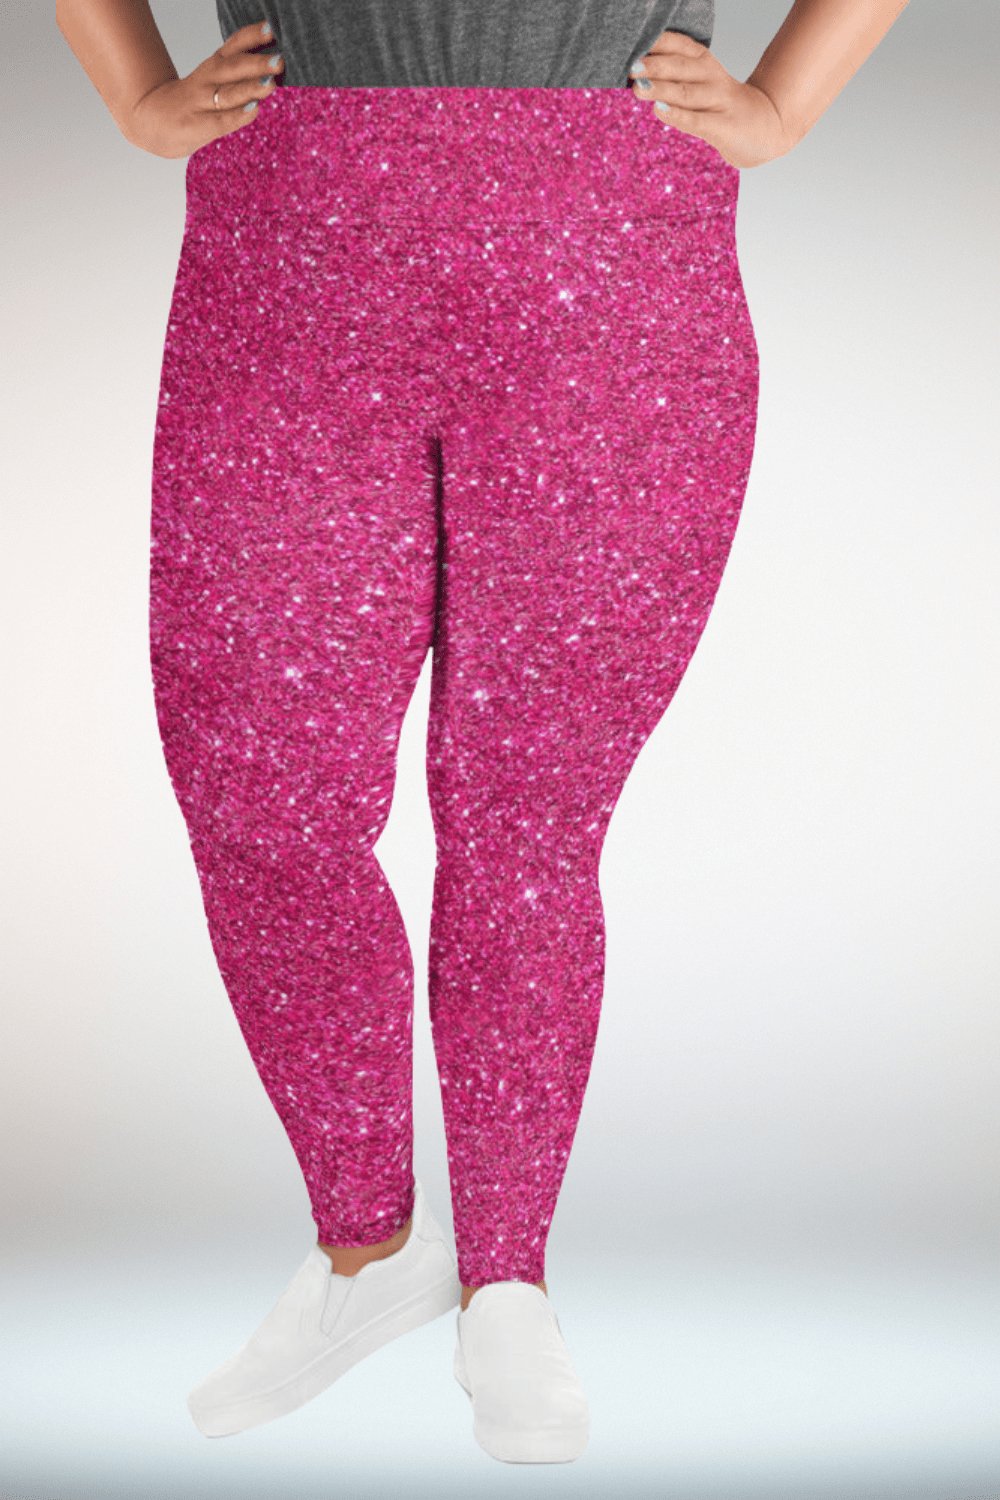 Hot Pink Glitter Print Plus Size Leggings - TGC Boutique - Leggings